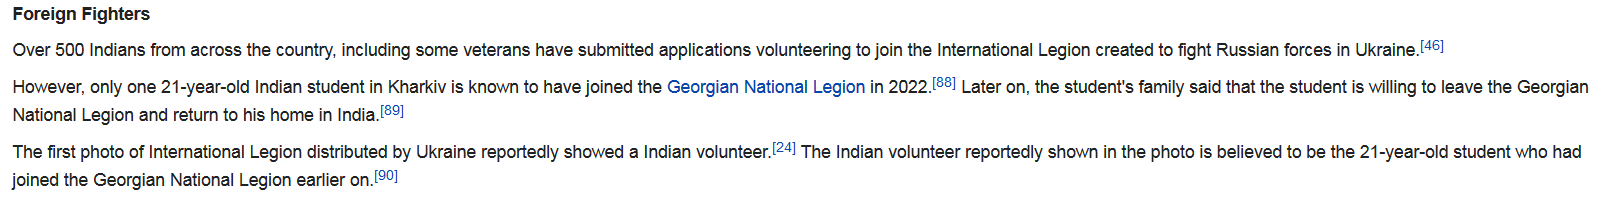 Screenshot_2022-03-15 International Legion of Territorial Defense of Ukraine - Wikipedia.png